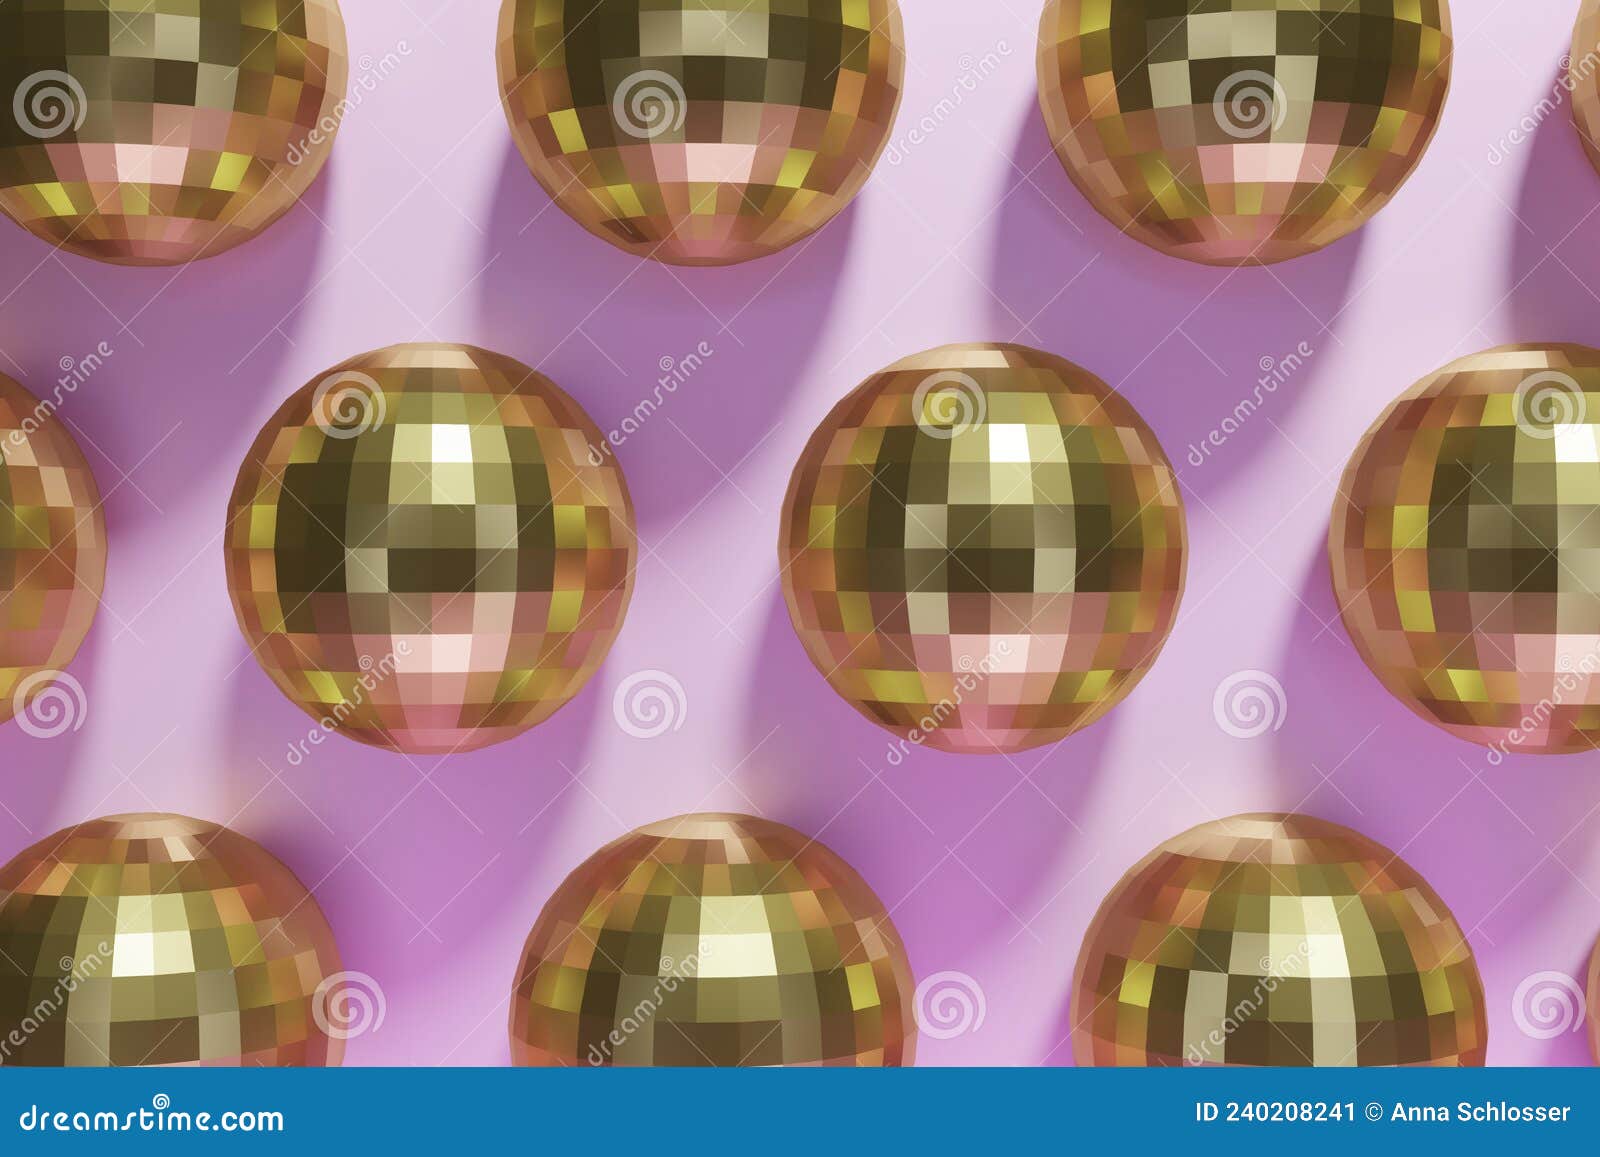 3d render of festive shiny gold dico balls pattern